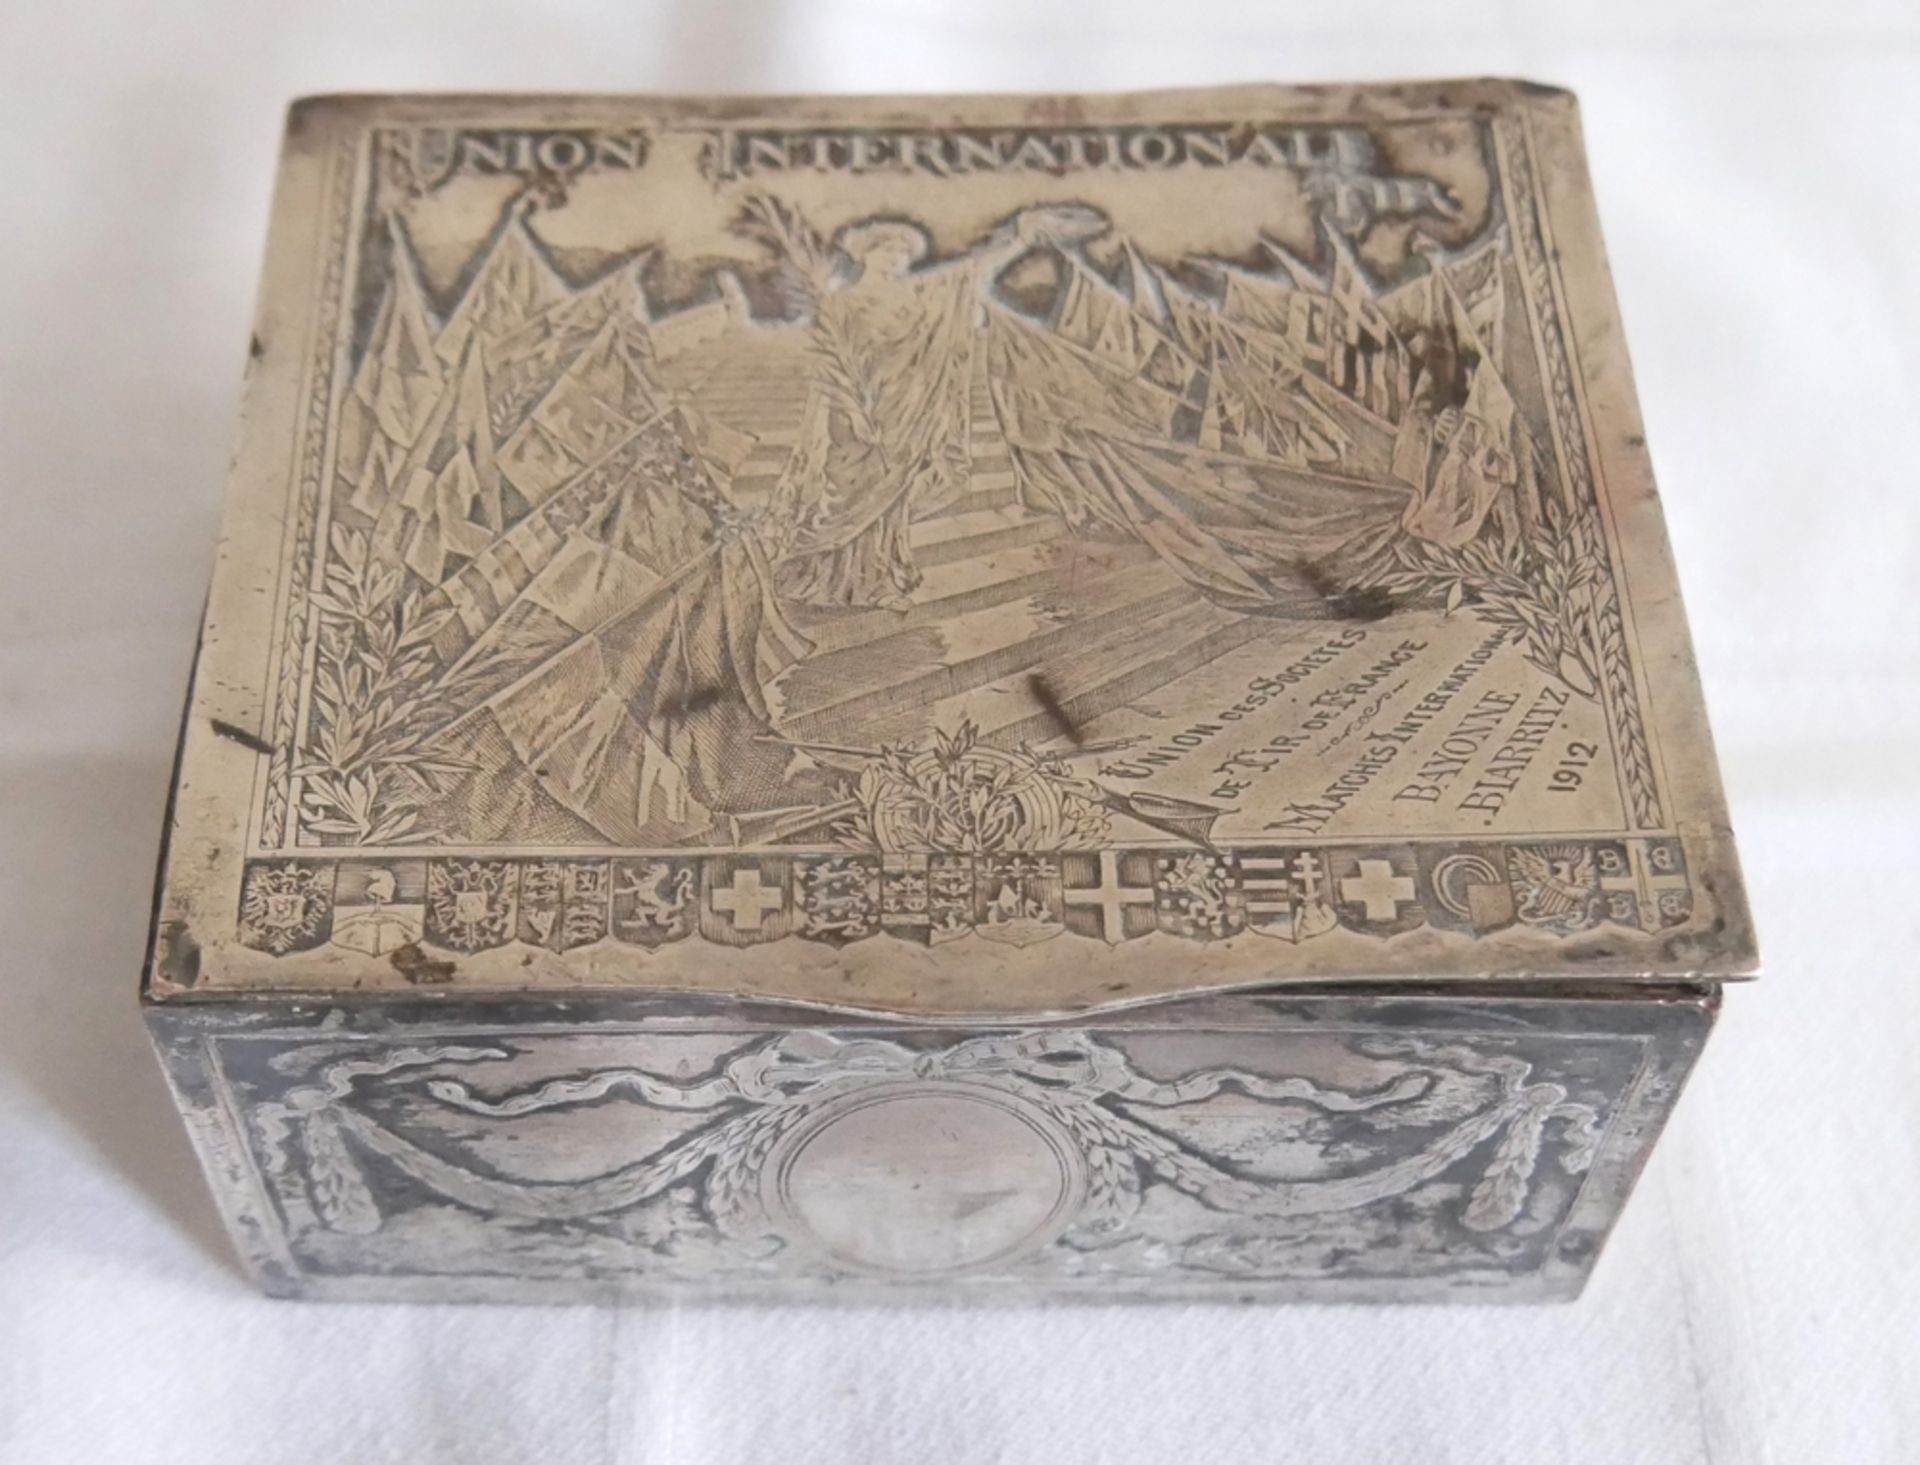 Holzdose versilbert, mit Gravur "Union Internationale 1912", Höhe ca. 5 cm, Länge ca.10,5 cm,